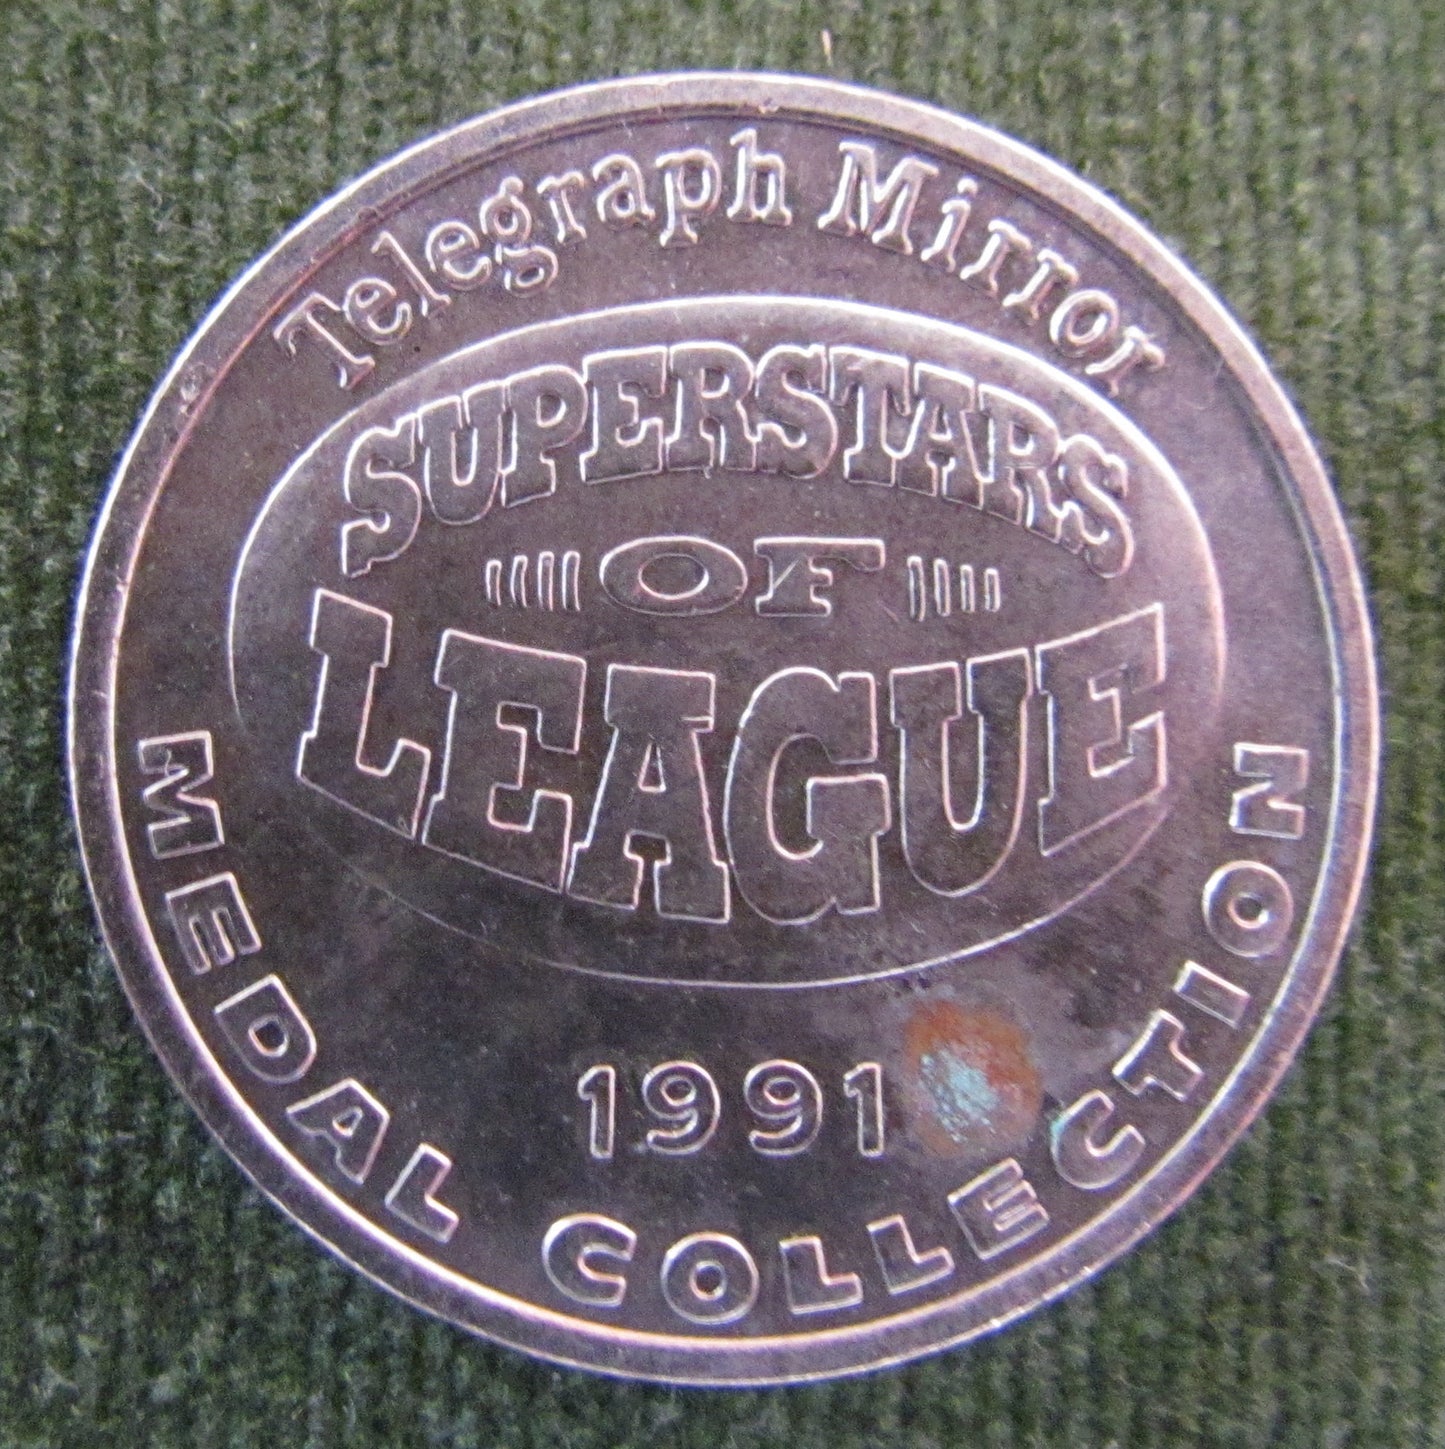 1991 Superstars Of League Andrew Ettingshausen Commemorative Medallion - Sunday Telegraph